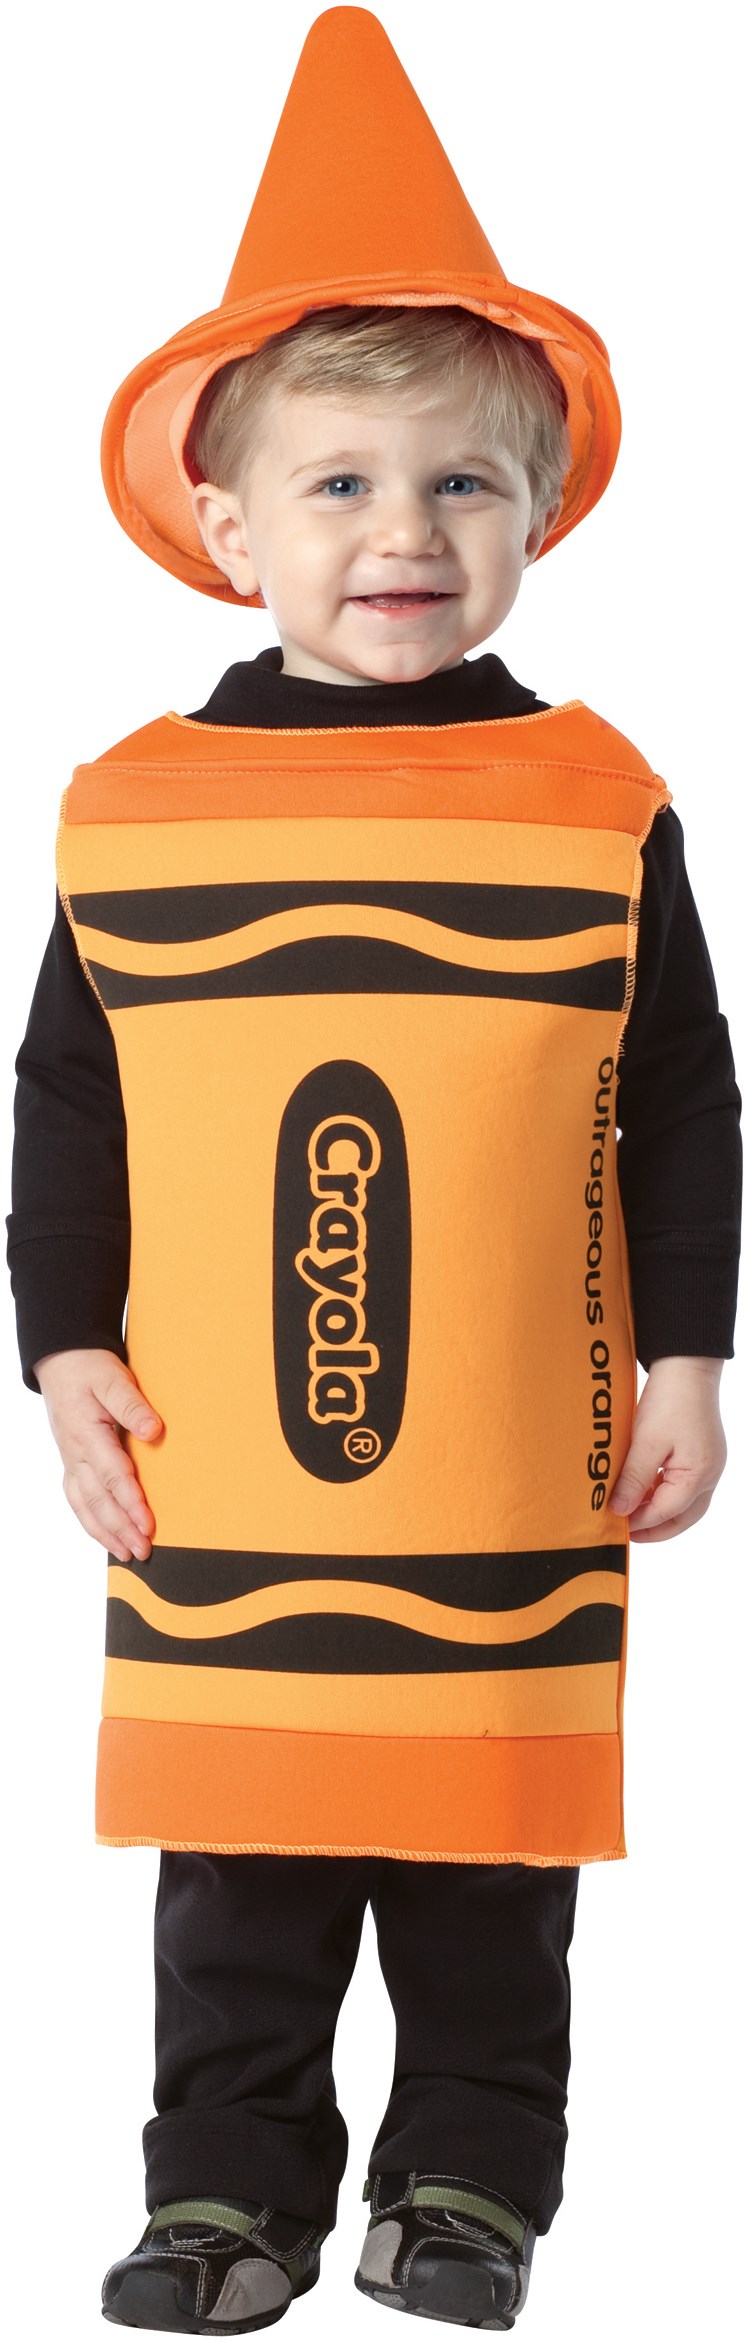 Crayola Outrageous Orange Crayon Toddler Costume